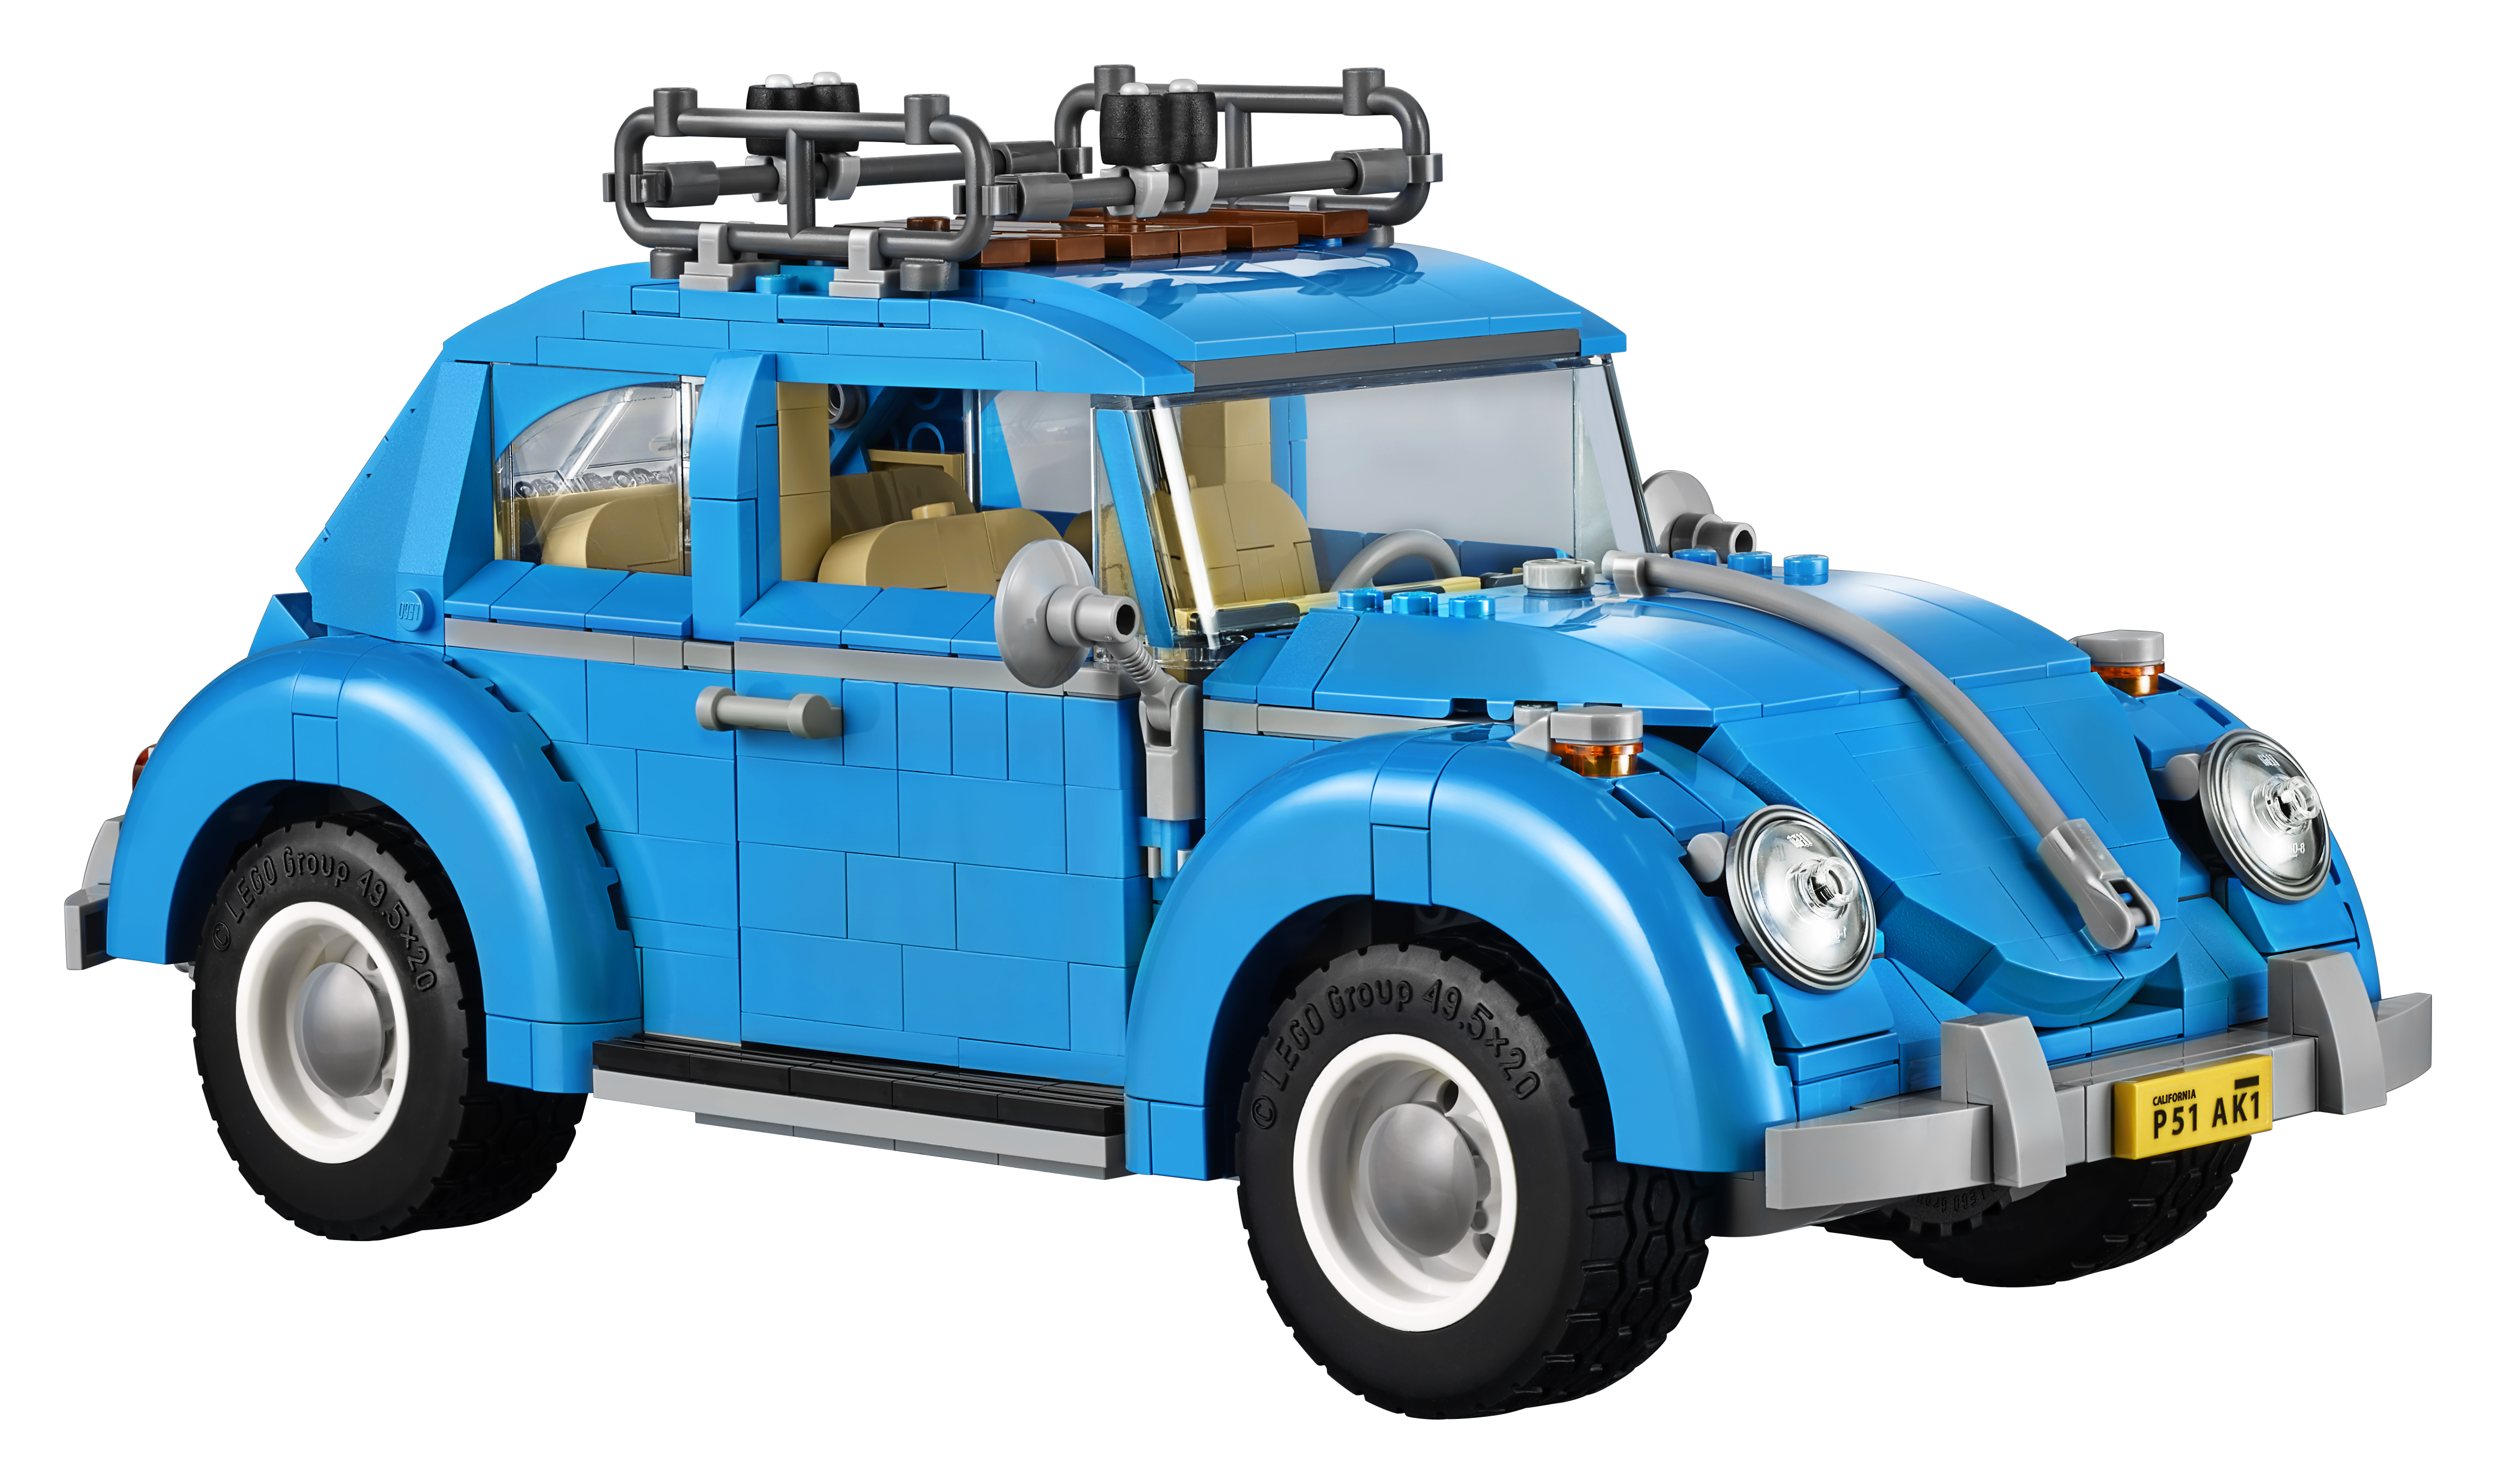 LEGO Announces 10252 Volkswagen Beetle - FBTB